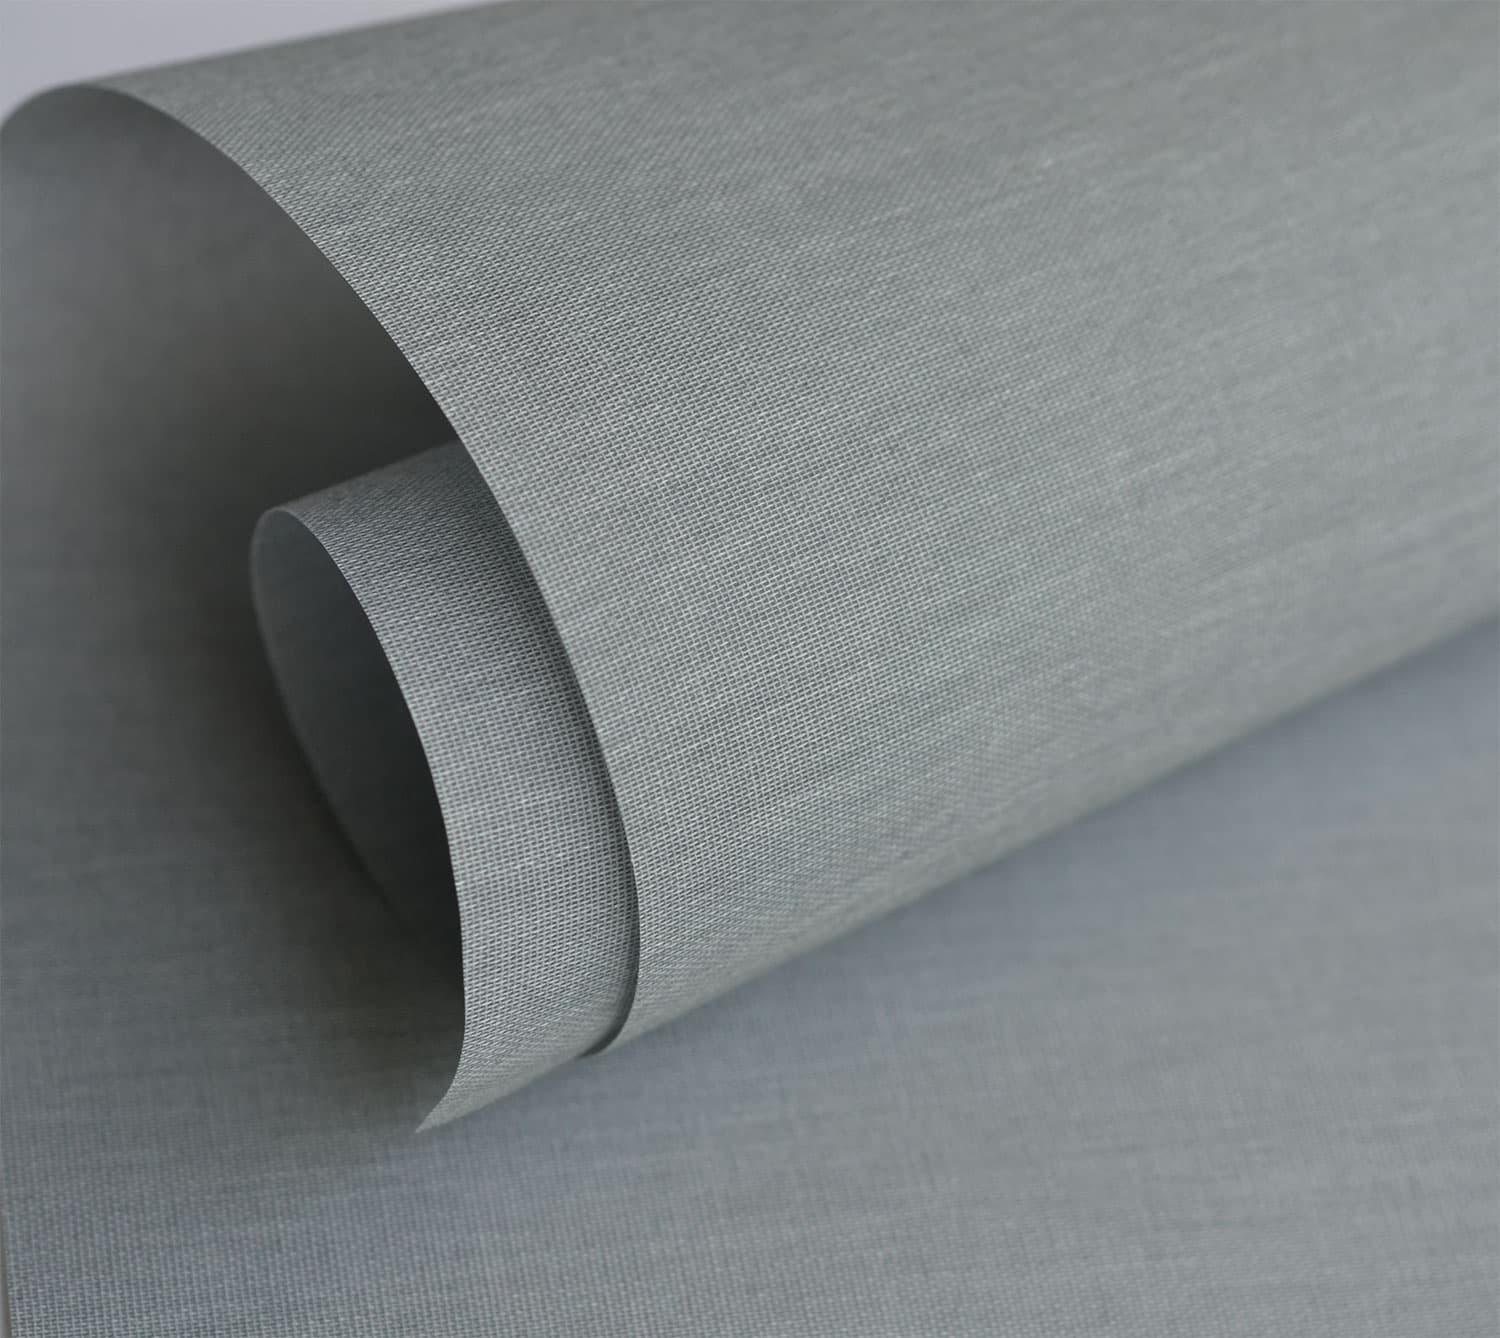 Ткань Омега для рулонных штор. Серый софт. Серый фактурный AFG 154-15 софт,. Техно 1852 серый.